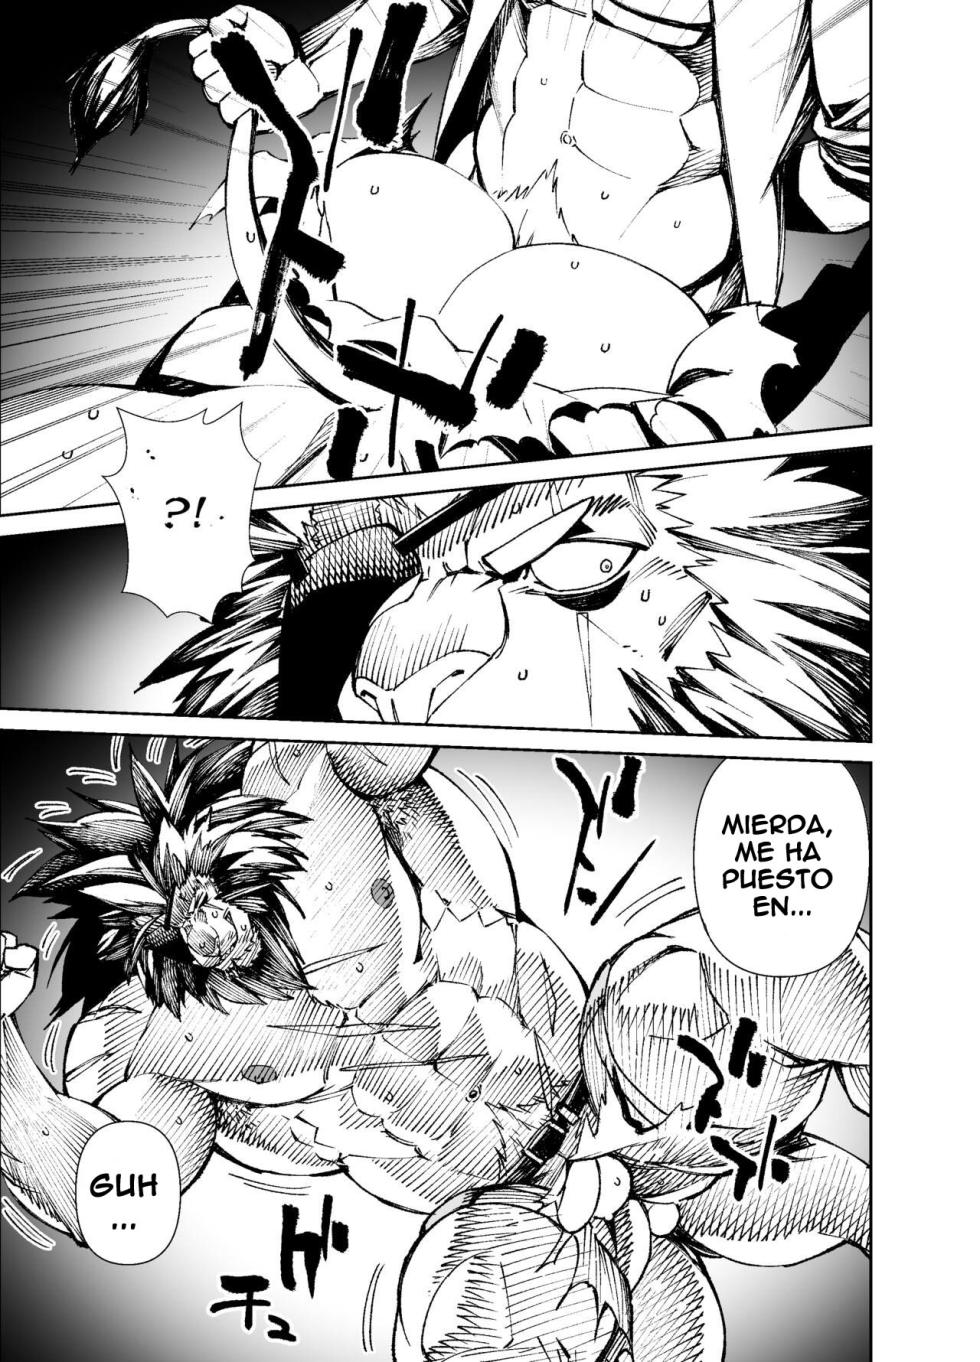 [Mennsuke] Manga 02 - Parts 1 to 11 [Español] (Ongoing) - Page 16